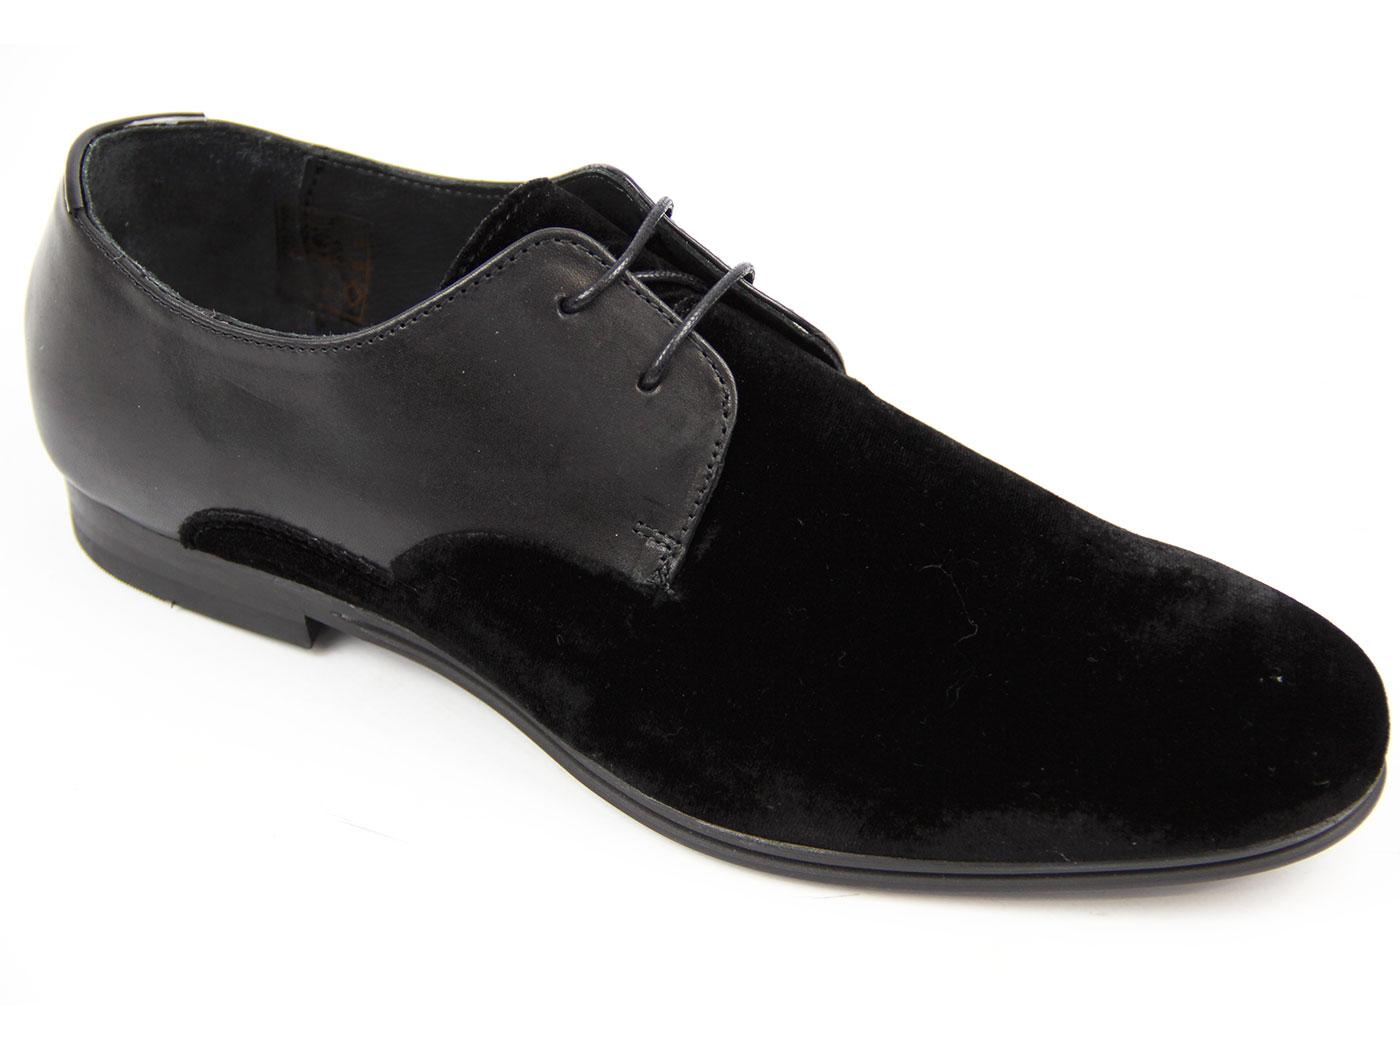 H by HUDSON Robbins Retro Mod Velvet & Leather Shoes Black